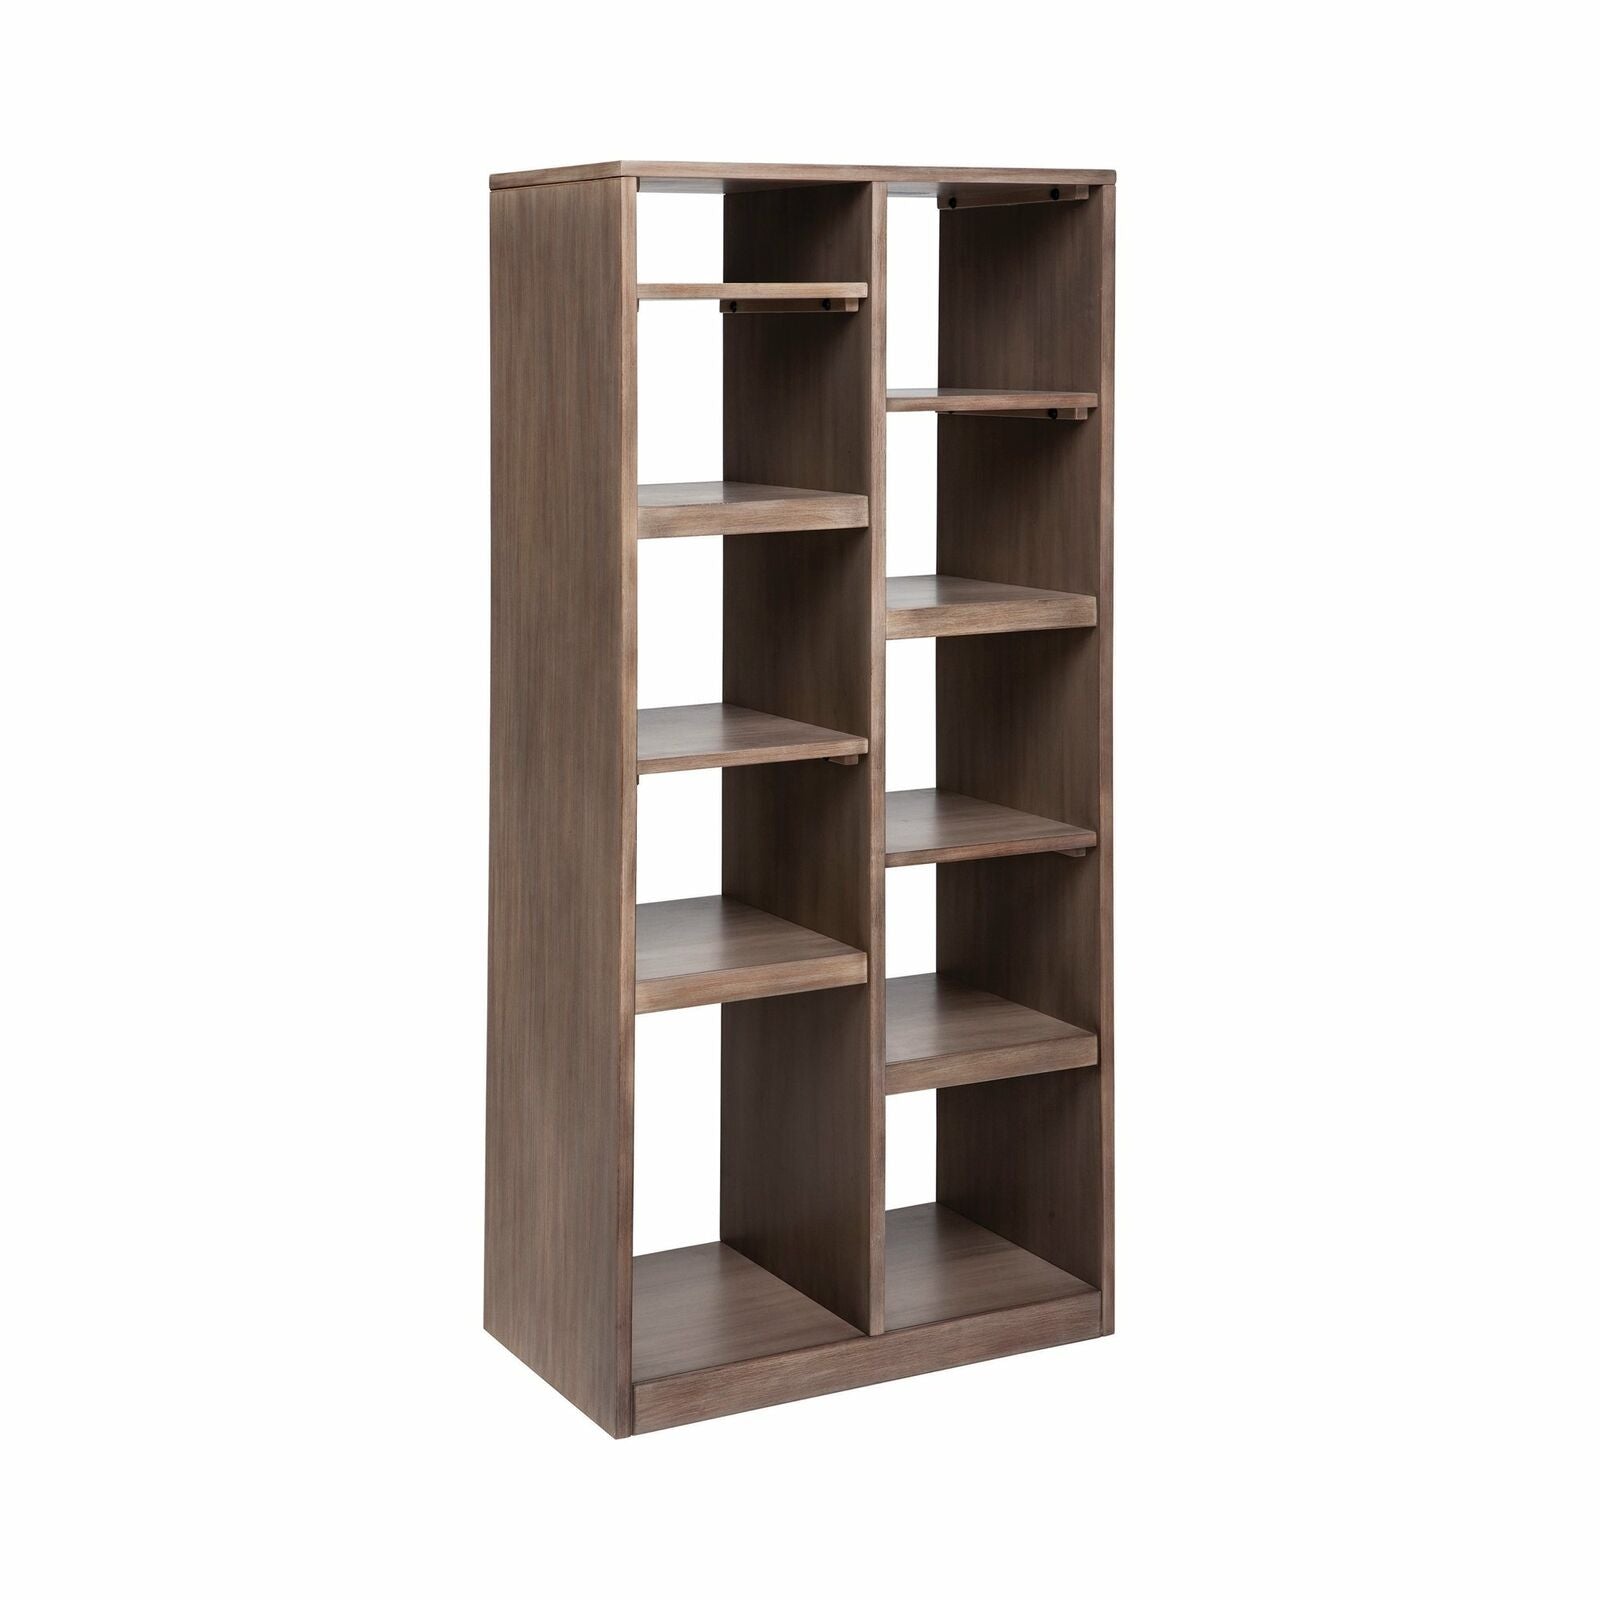 10-shelf Rectangular Etagere BookCase Display Shelf Sandstone